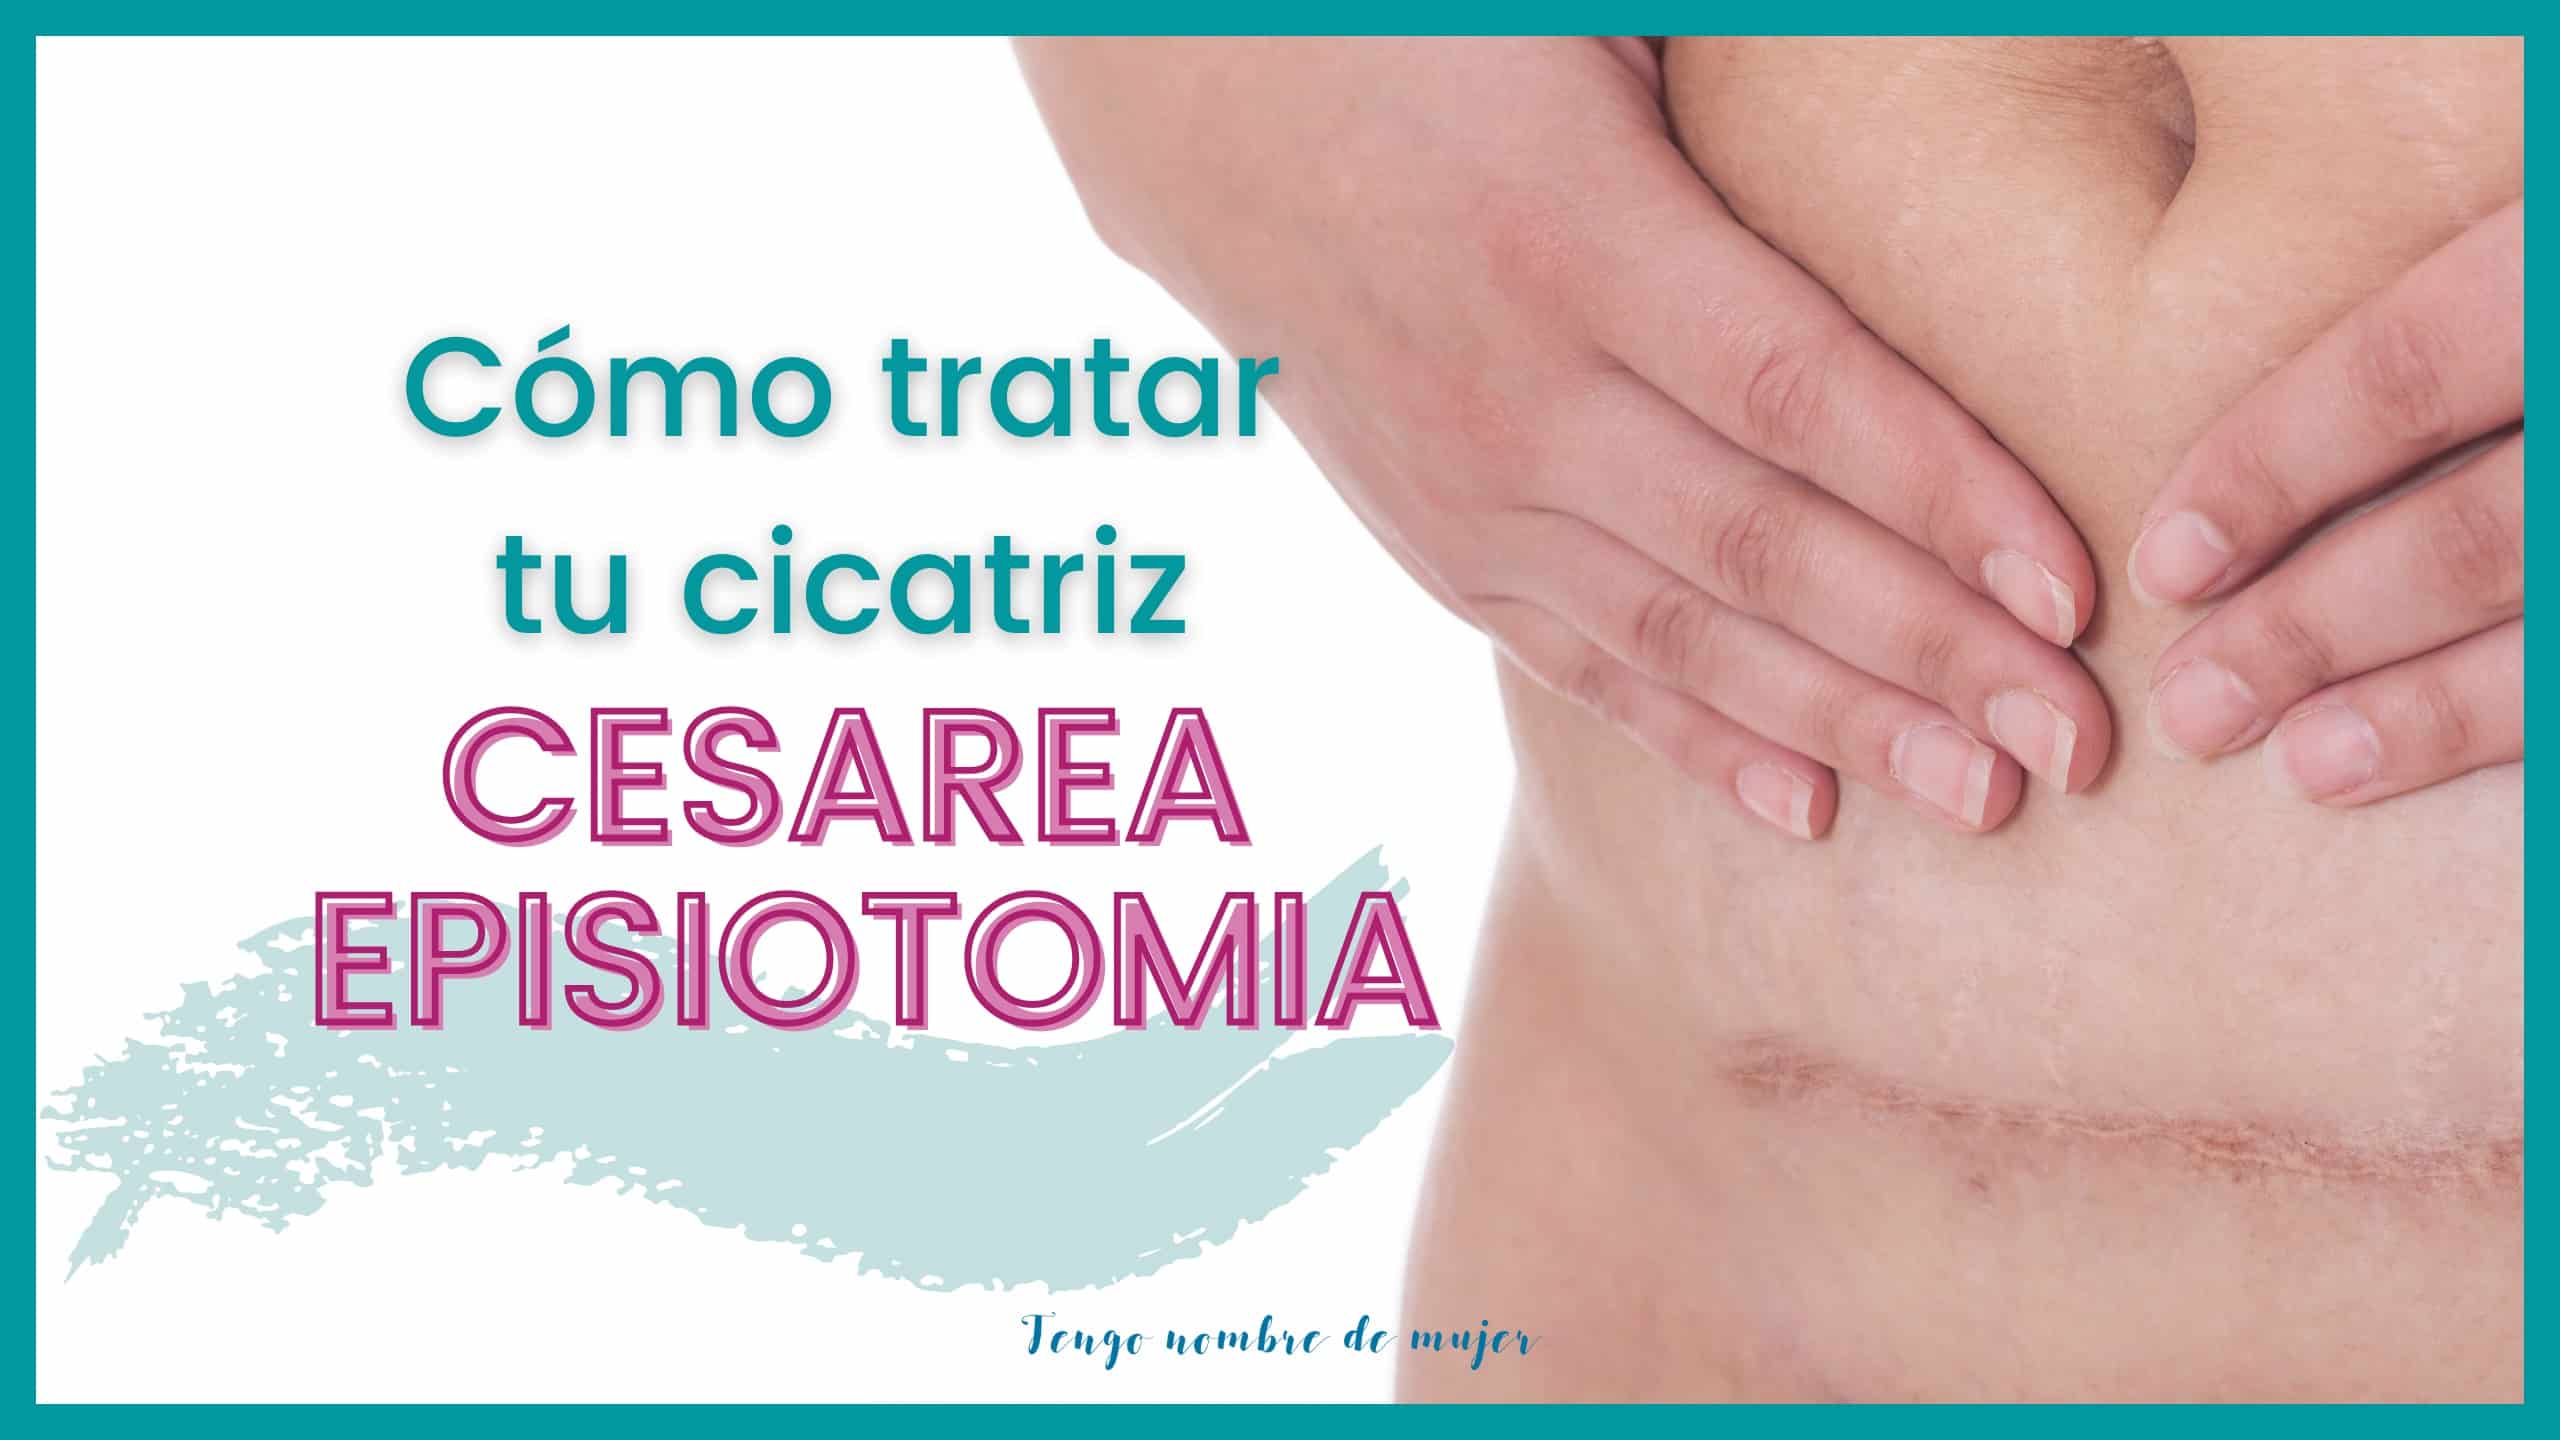 Cómo tratar tu cicatriz de cesárea o episiotomía? - TNDM